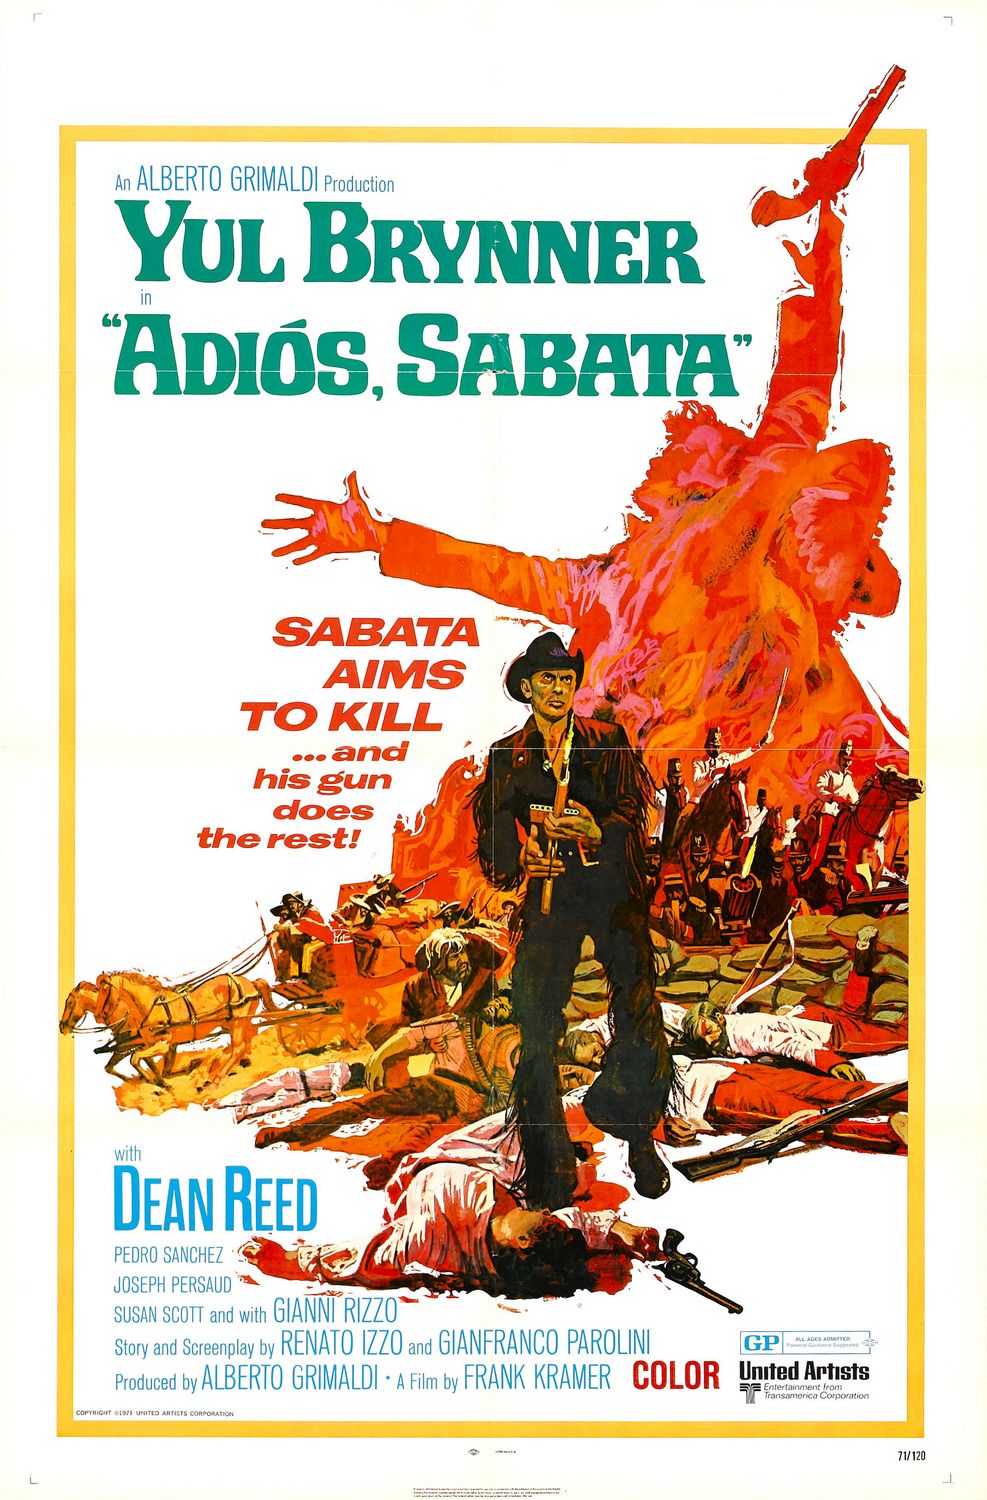 Extra Large Movie Poster Image for Adios Sabata 